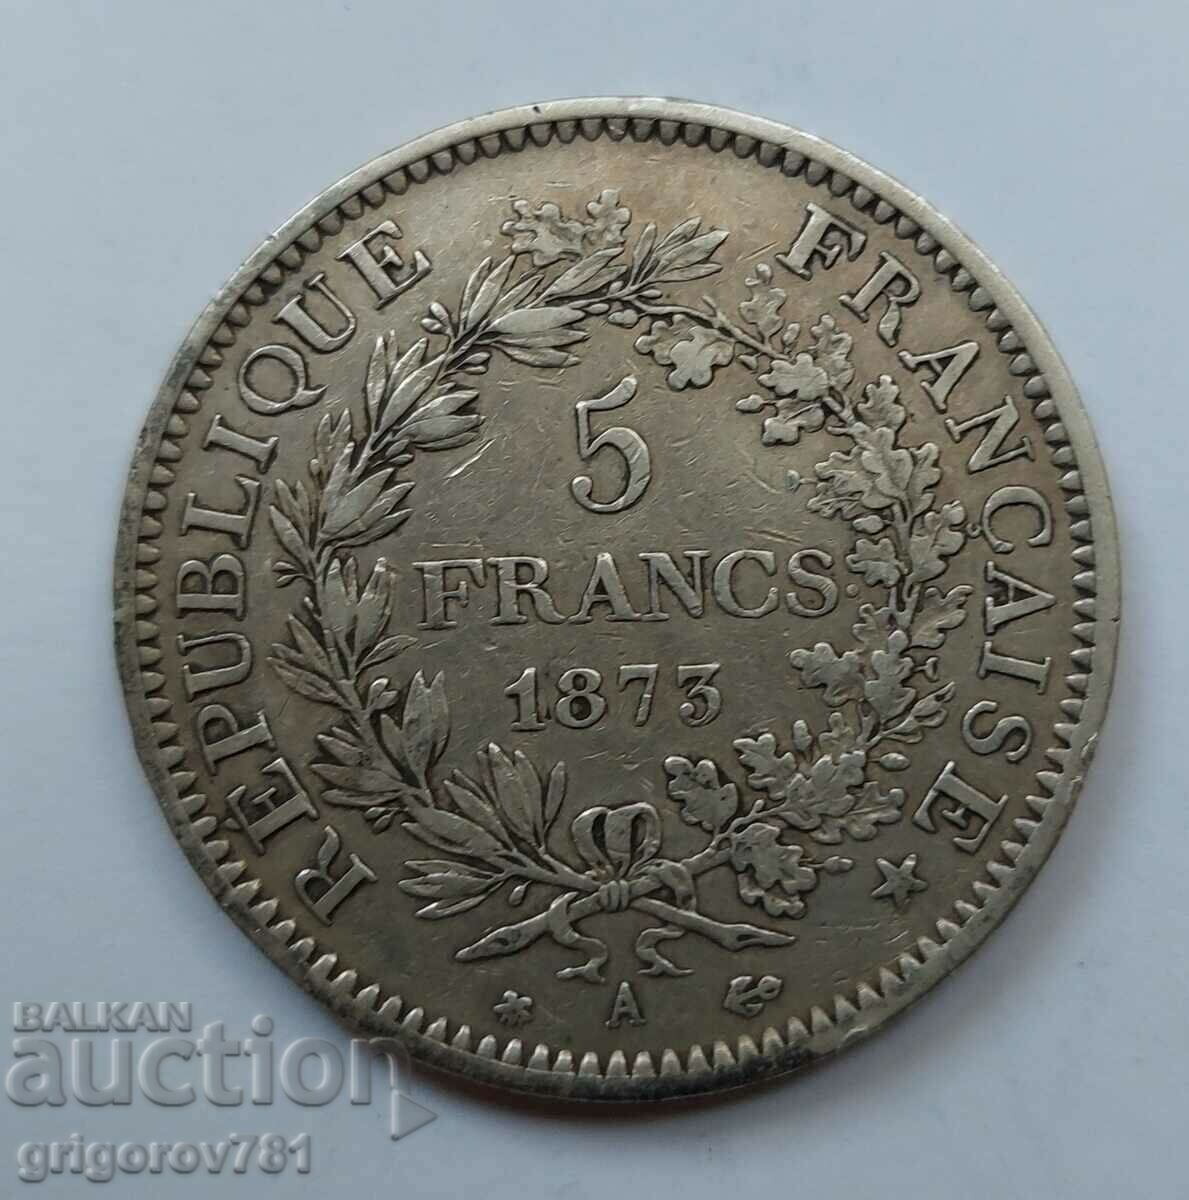 5 Francs Silver France 1873 A - Silver Coin #206